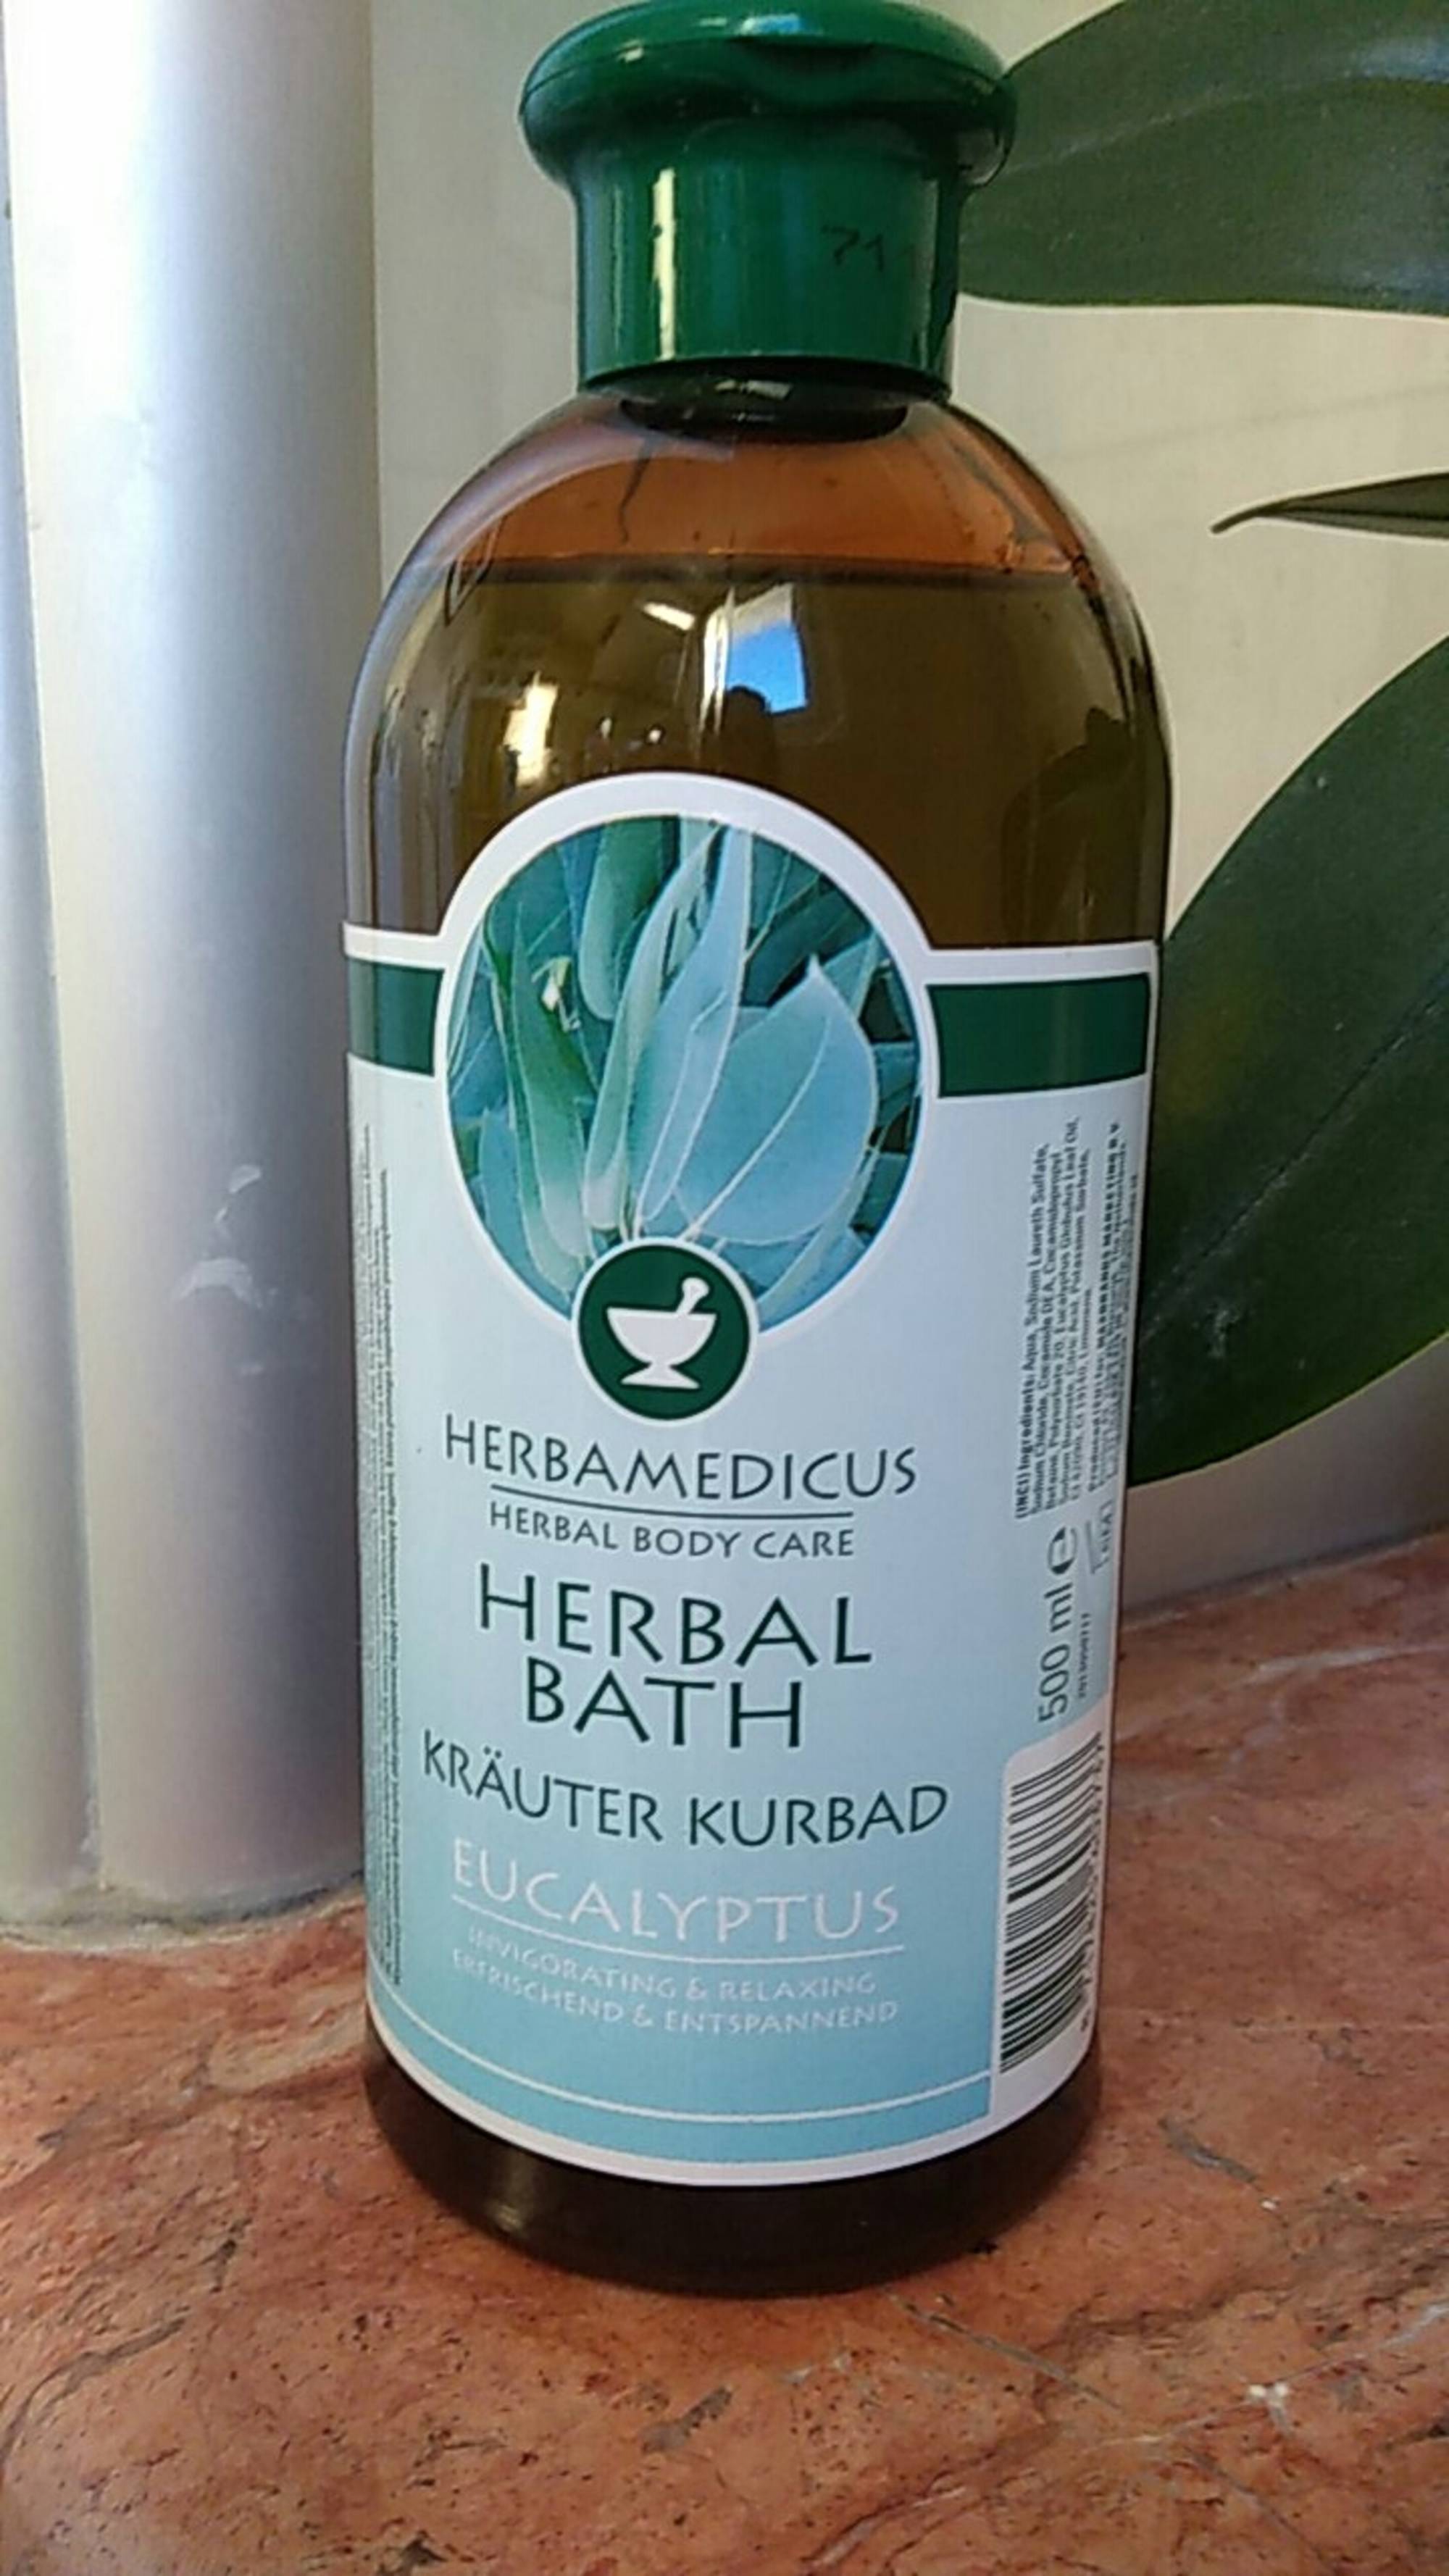 HERBAMEDICUS - Kräuter Kurbad herbal bath eukalyptus